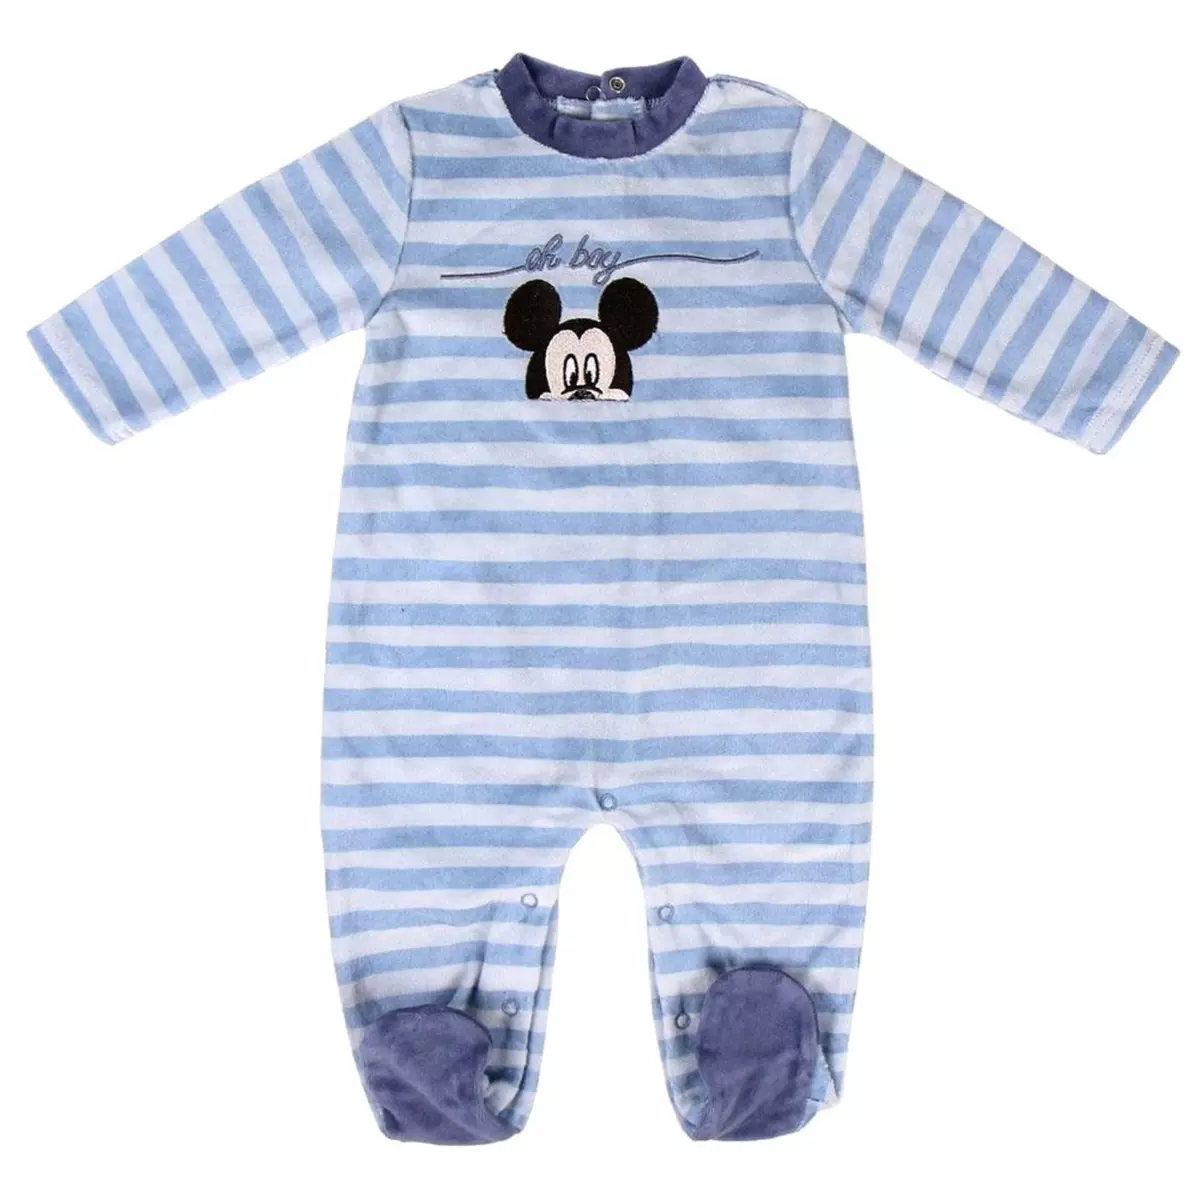 DISNEY Dors bien Mickey taille 1 mois Pyjamas bebe cadeau naissance